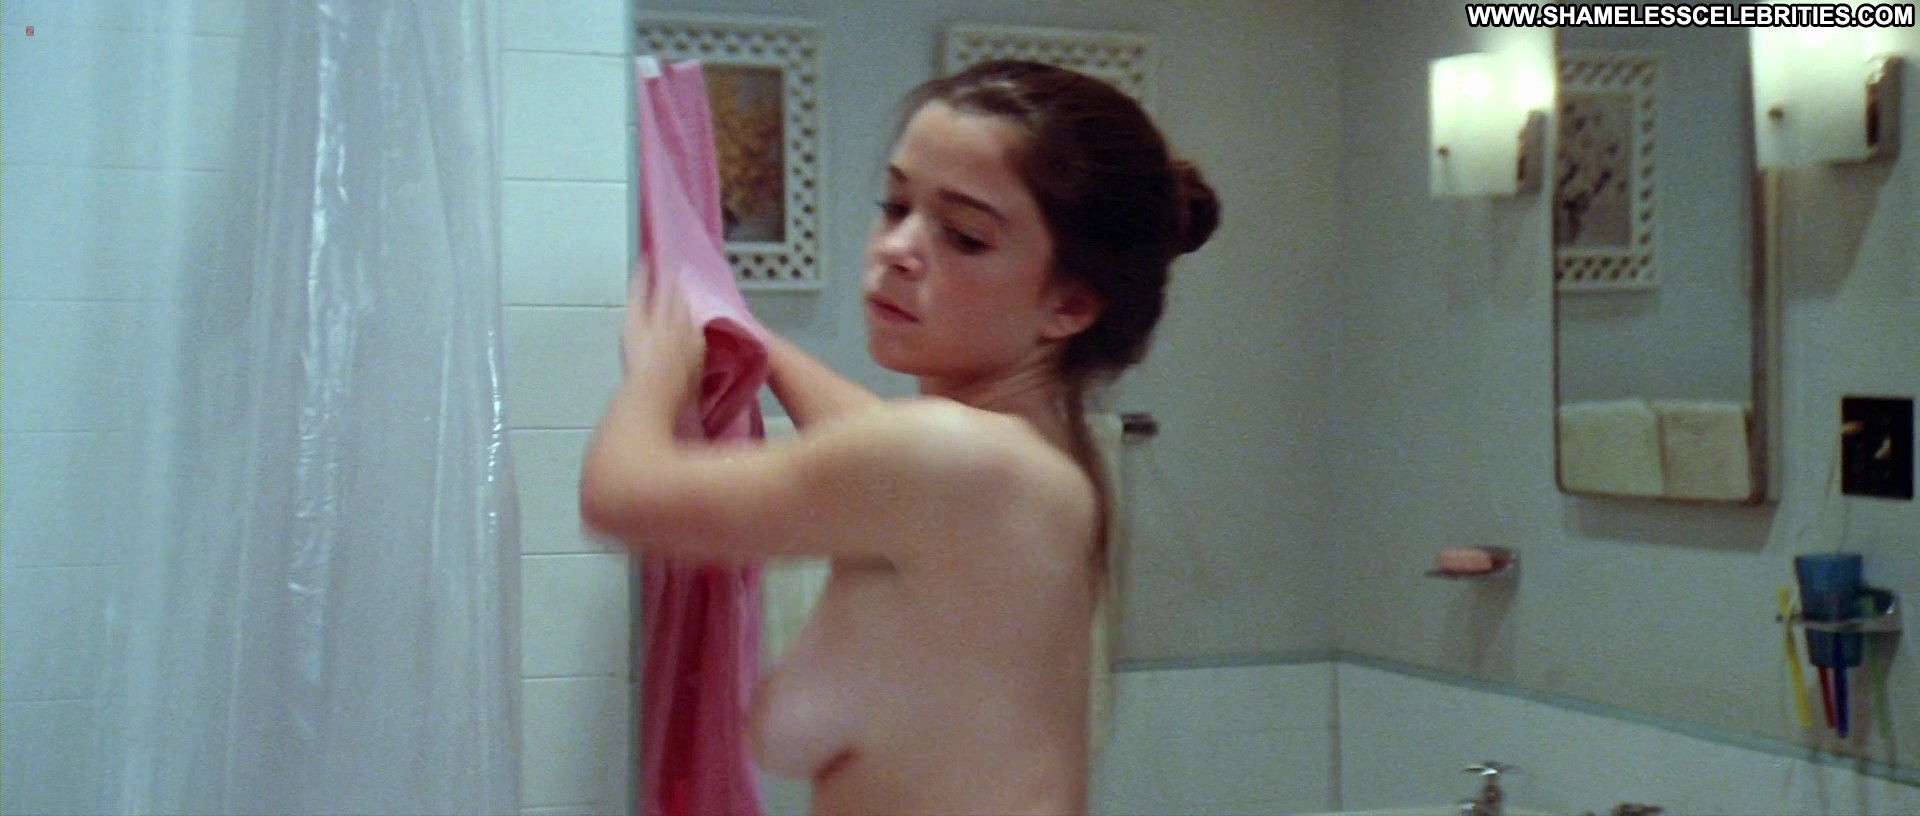 elizabeth-berridge-the-funhouse-celebrity-shower-posing-hot-topless-nude-3.jpg